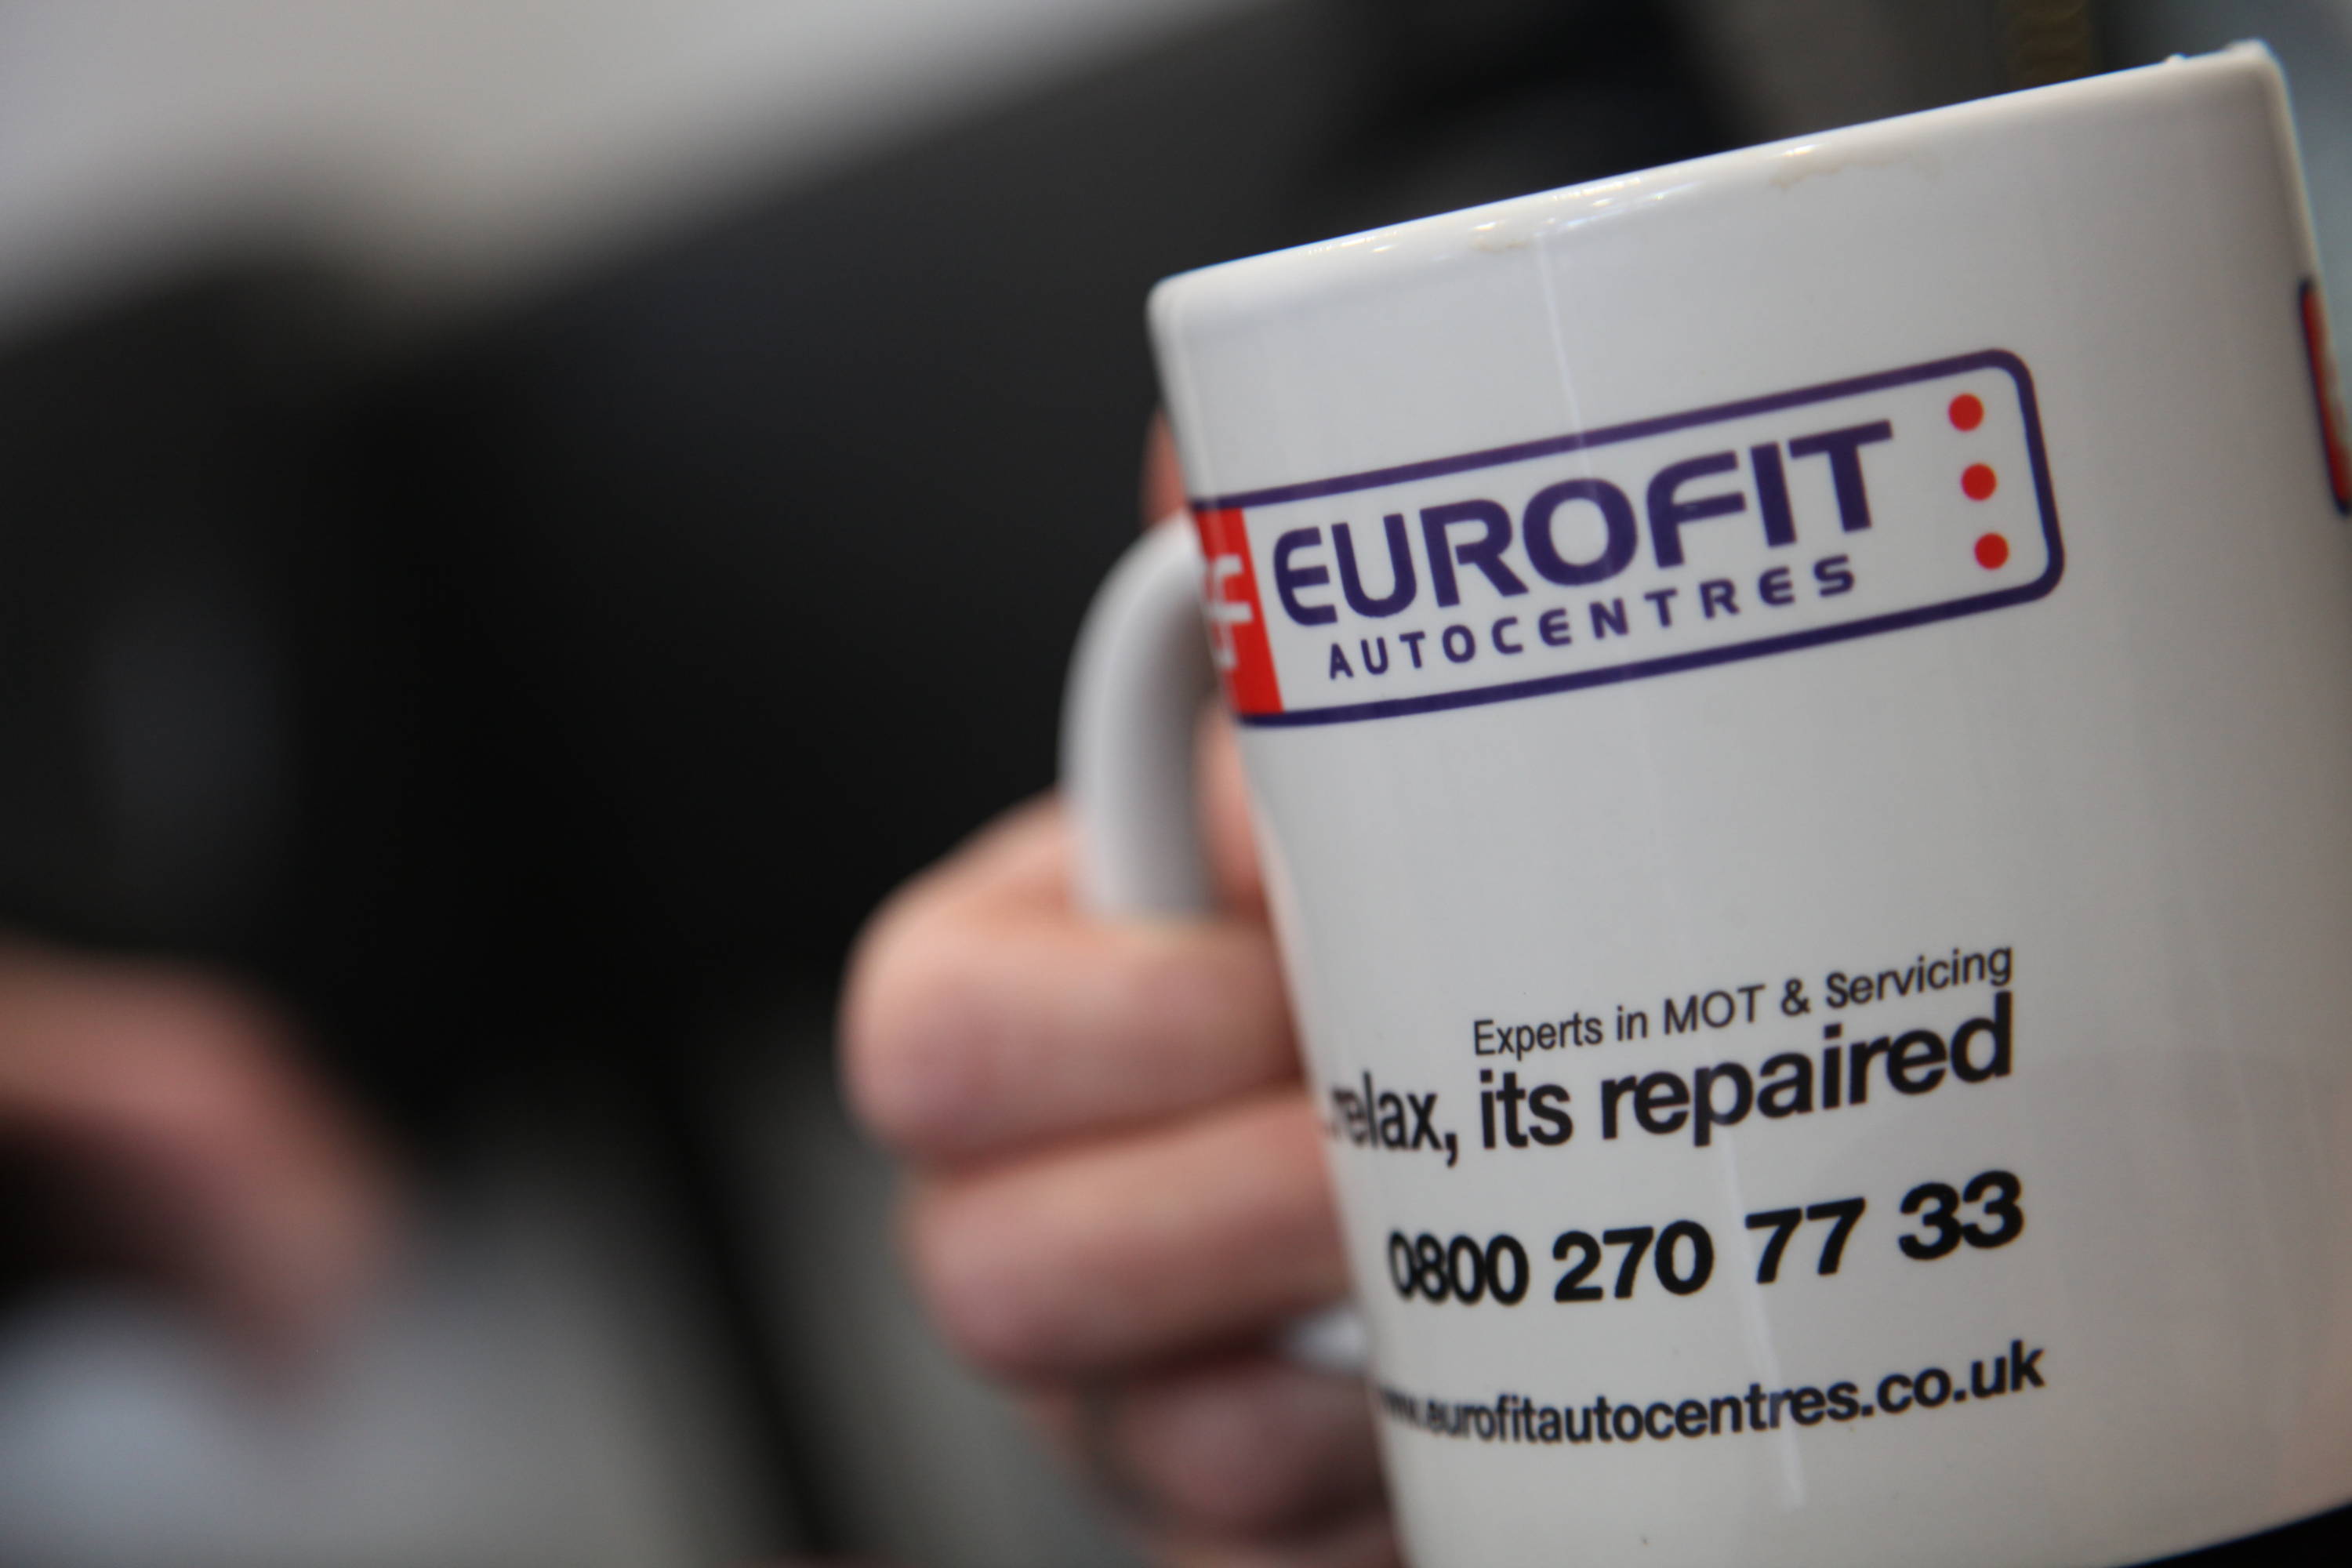 Close up of Eurofit mug with logo and contact details 